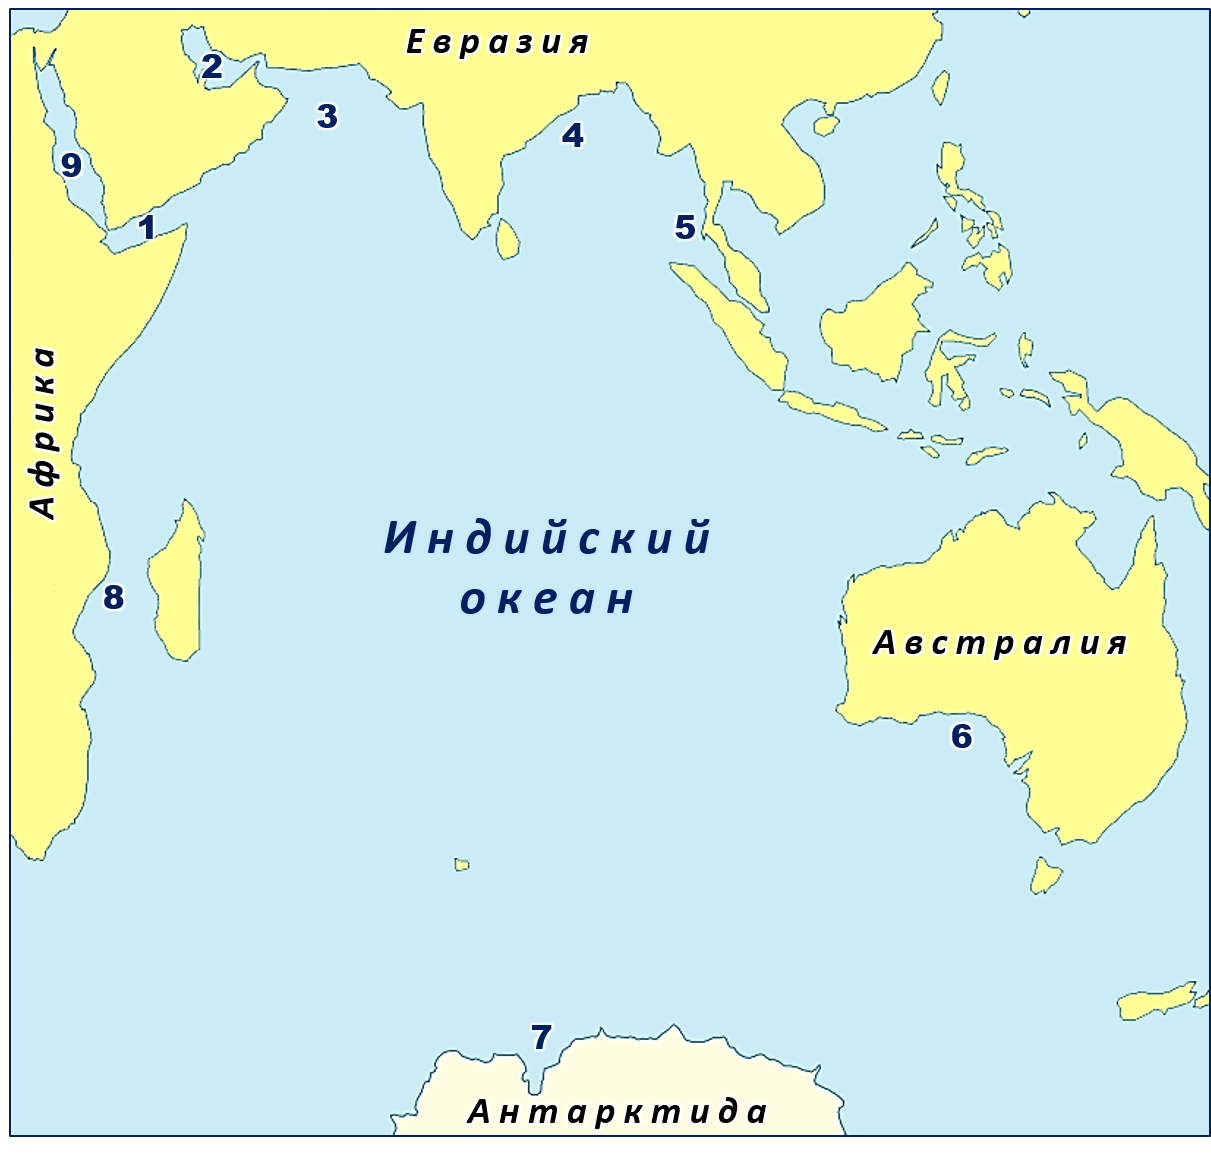 4 залива индийского океана. Индийский океан географическое положение на карте. Индийский океан географическое положение географическая карта. Карта индийского океана с морями заливами и проливами. Индийский океан на карте.